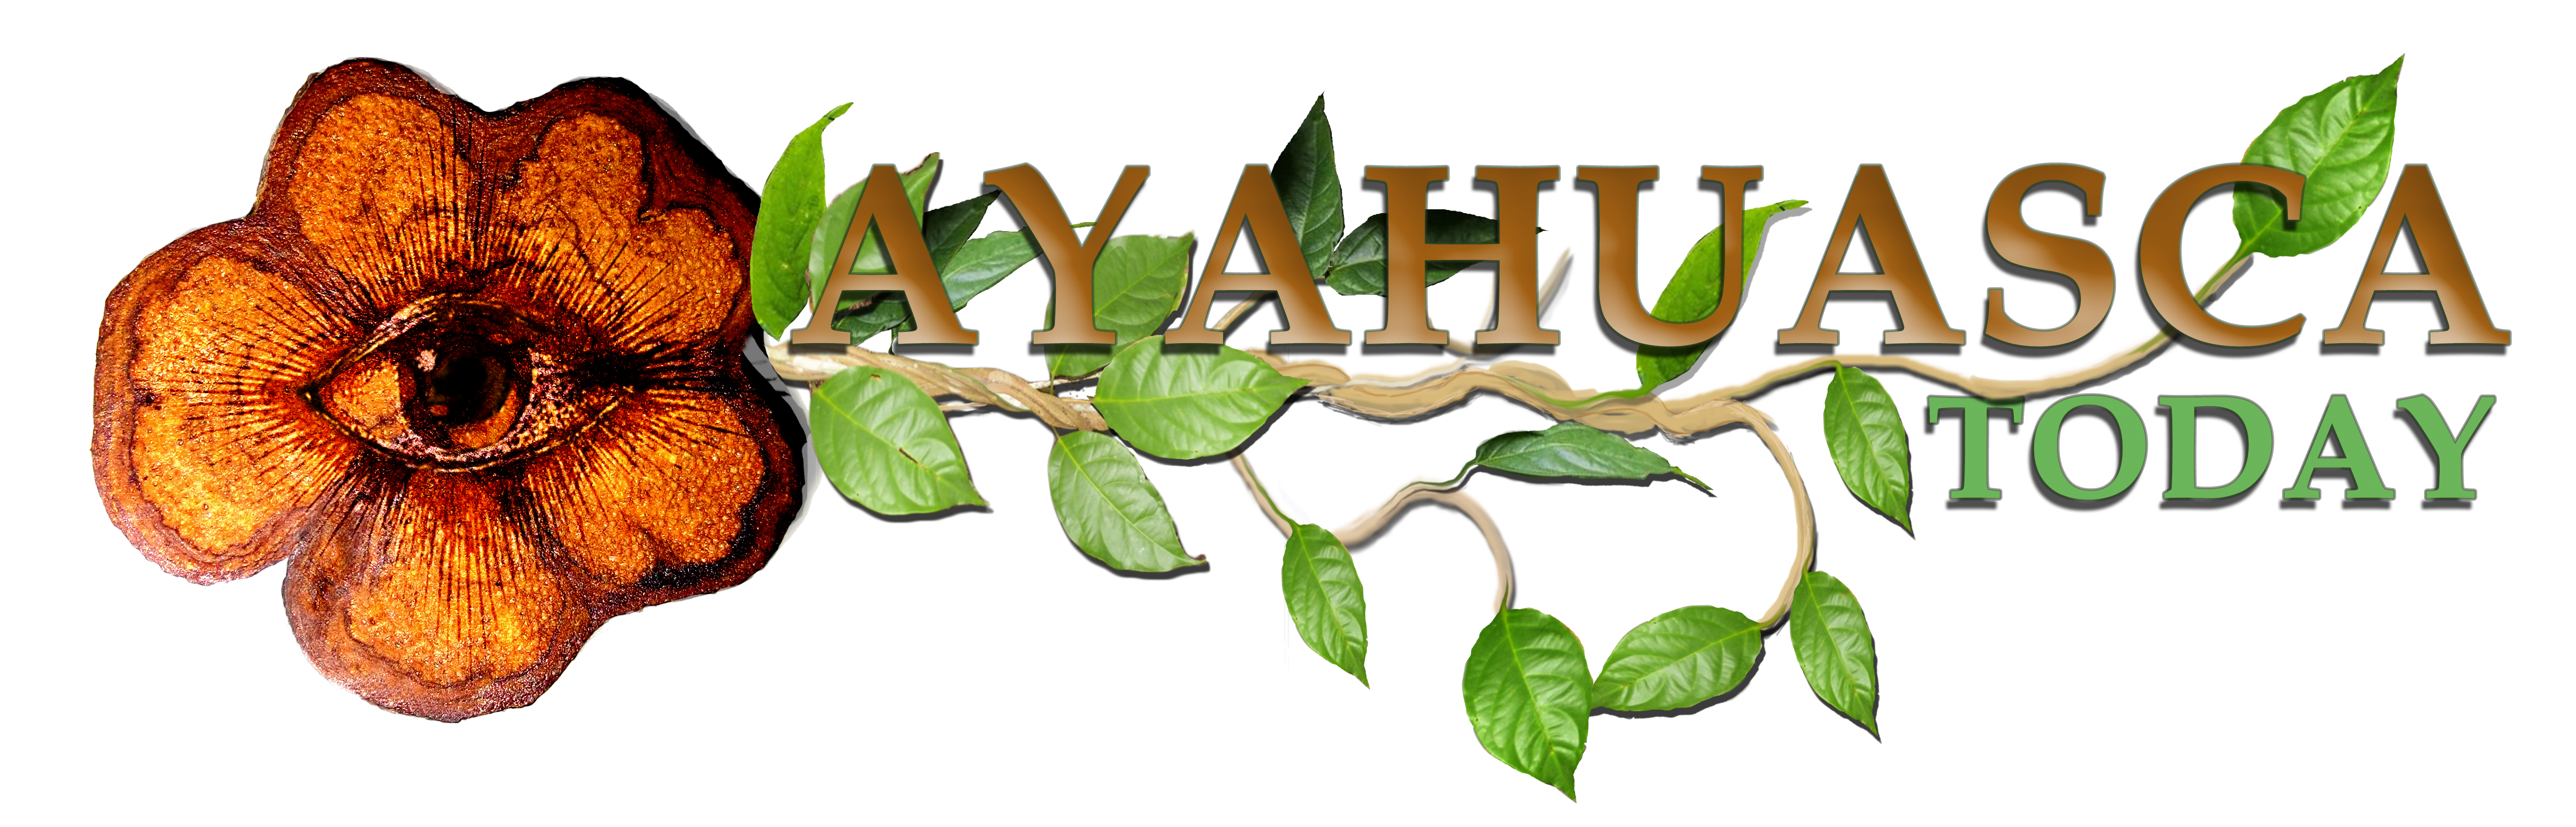 ayahuasca-today-logo-large